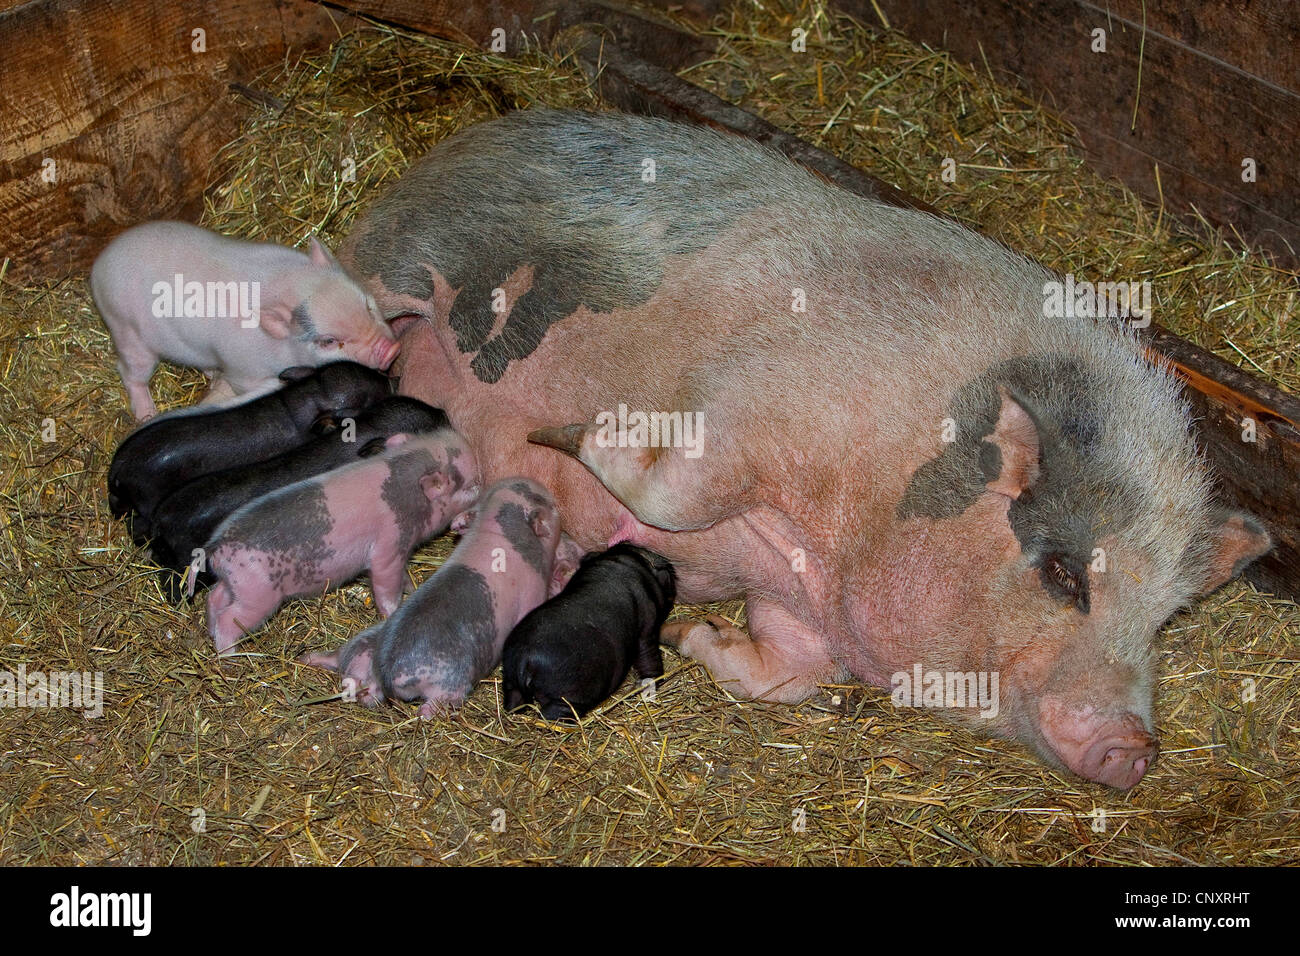 Vietnamese pot-bellied pig (Sus scrofa f. domestica), piglets suckling Stock Photo